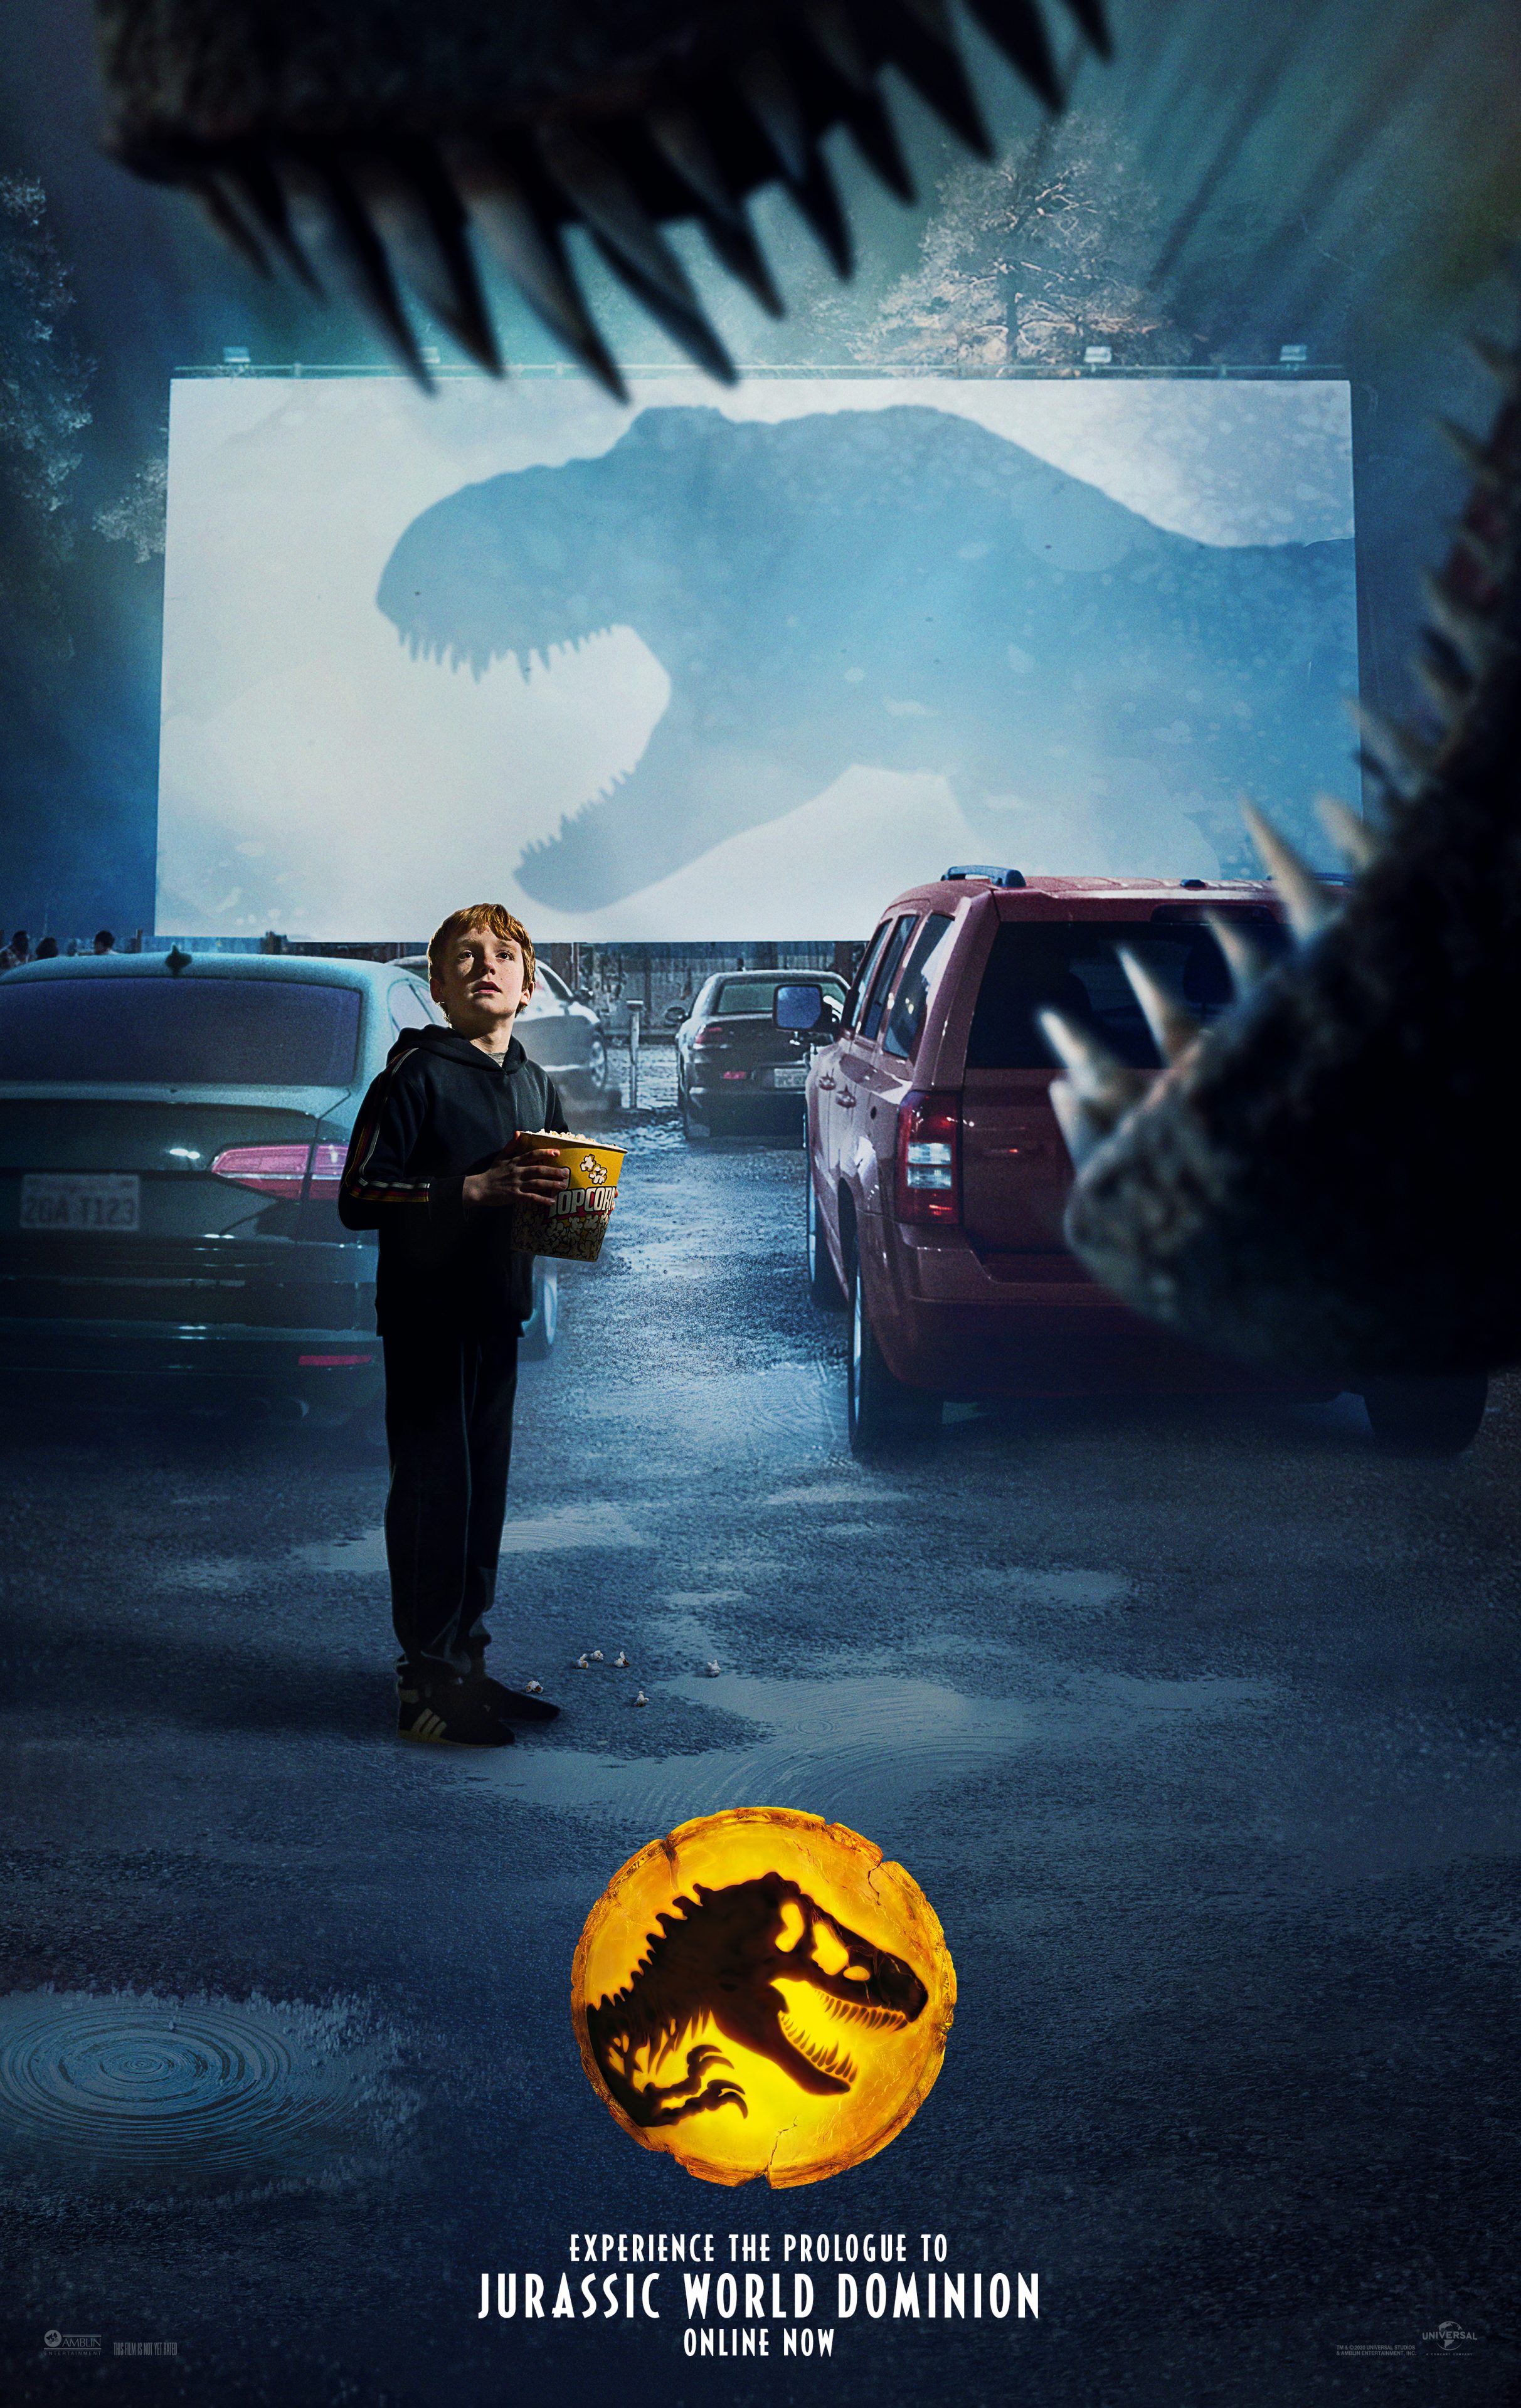 Dinosaurs roam the Earth again in ‘Jurassic Park: Dominion’ prologue